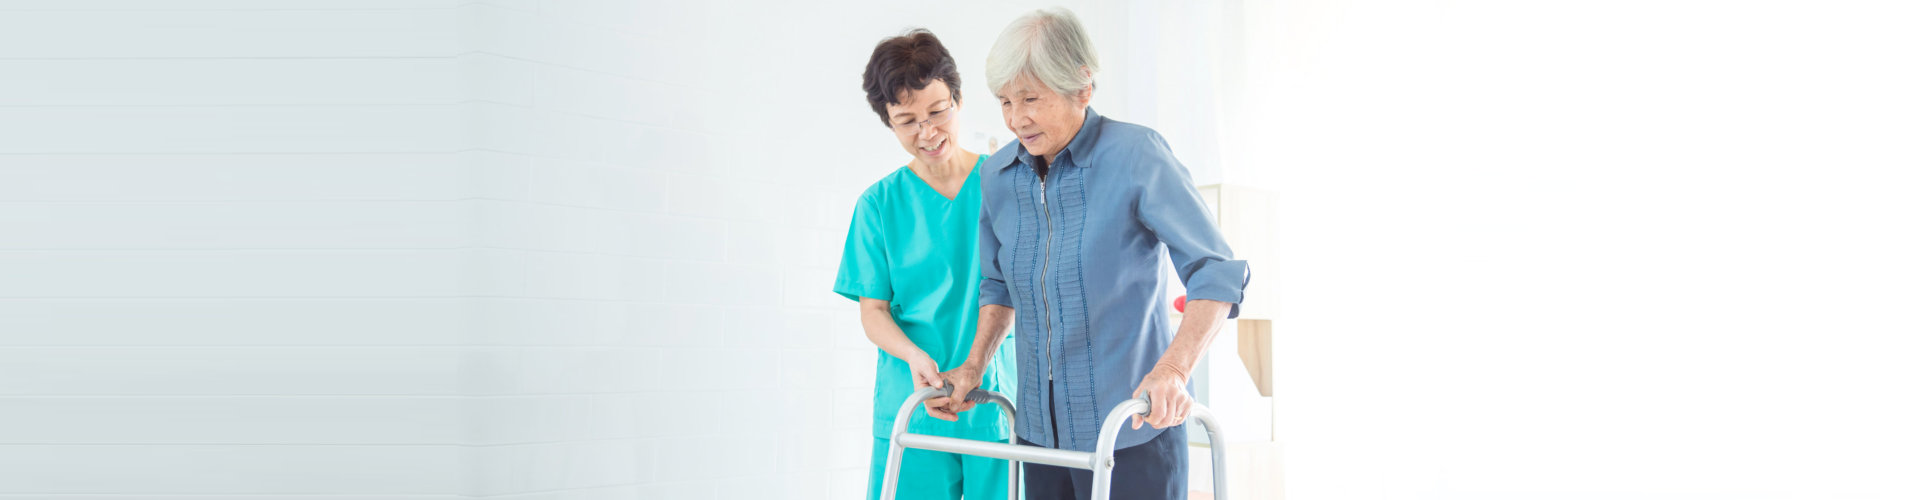 caregiver assisting senior woman walking using her walking frame